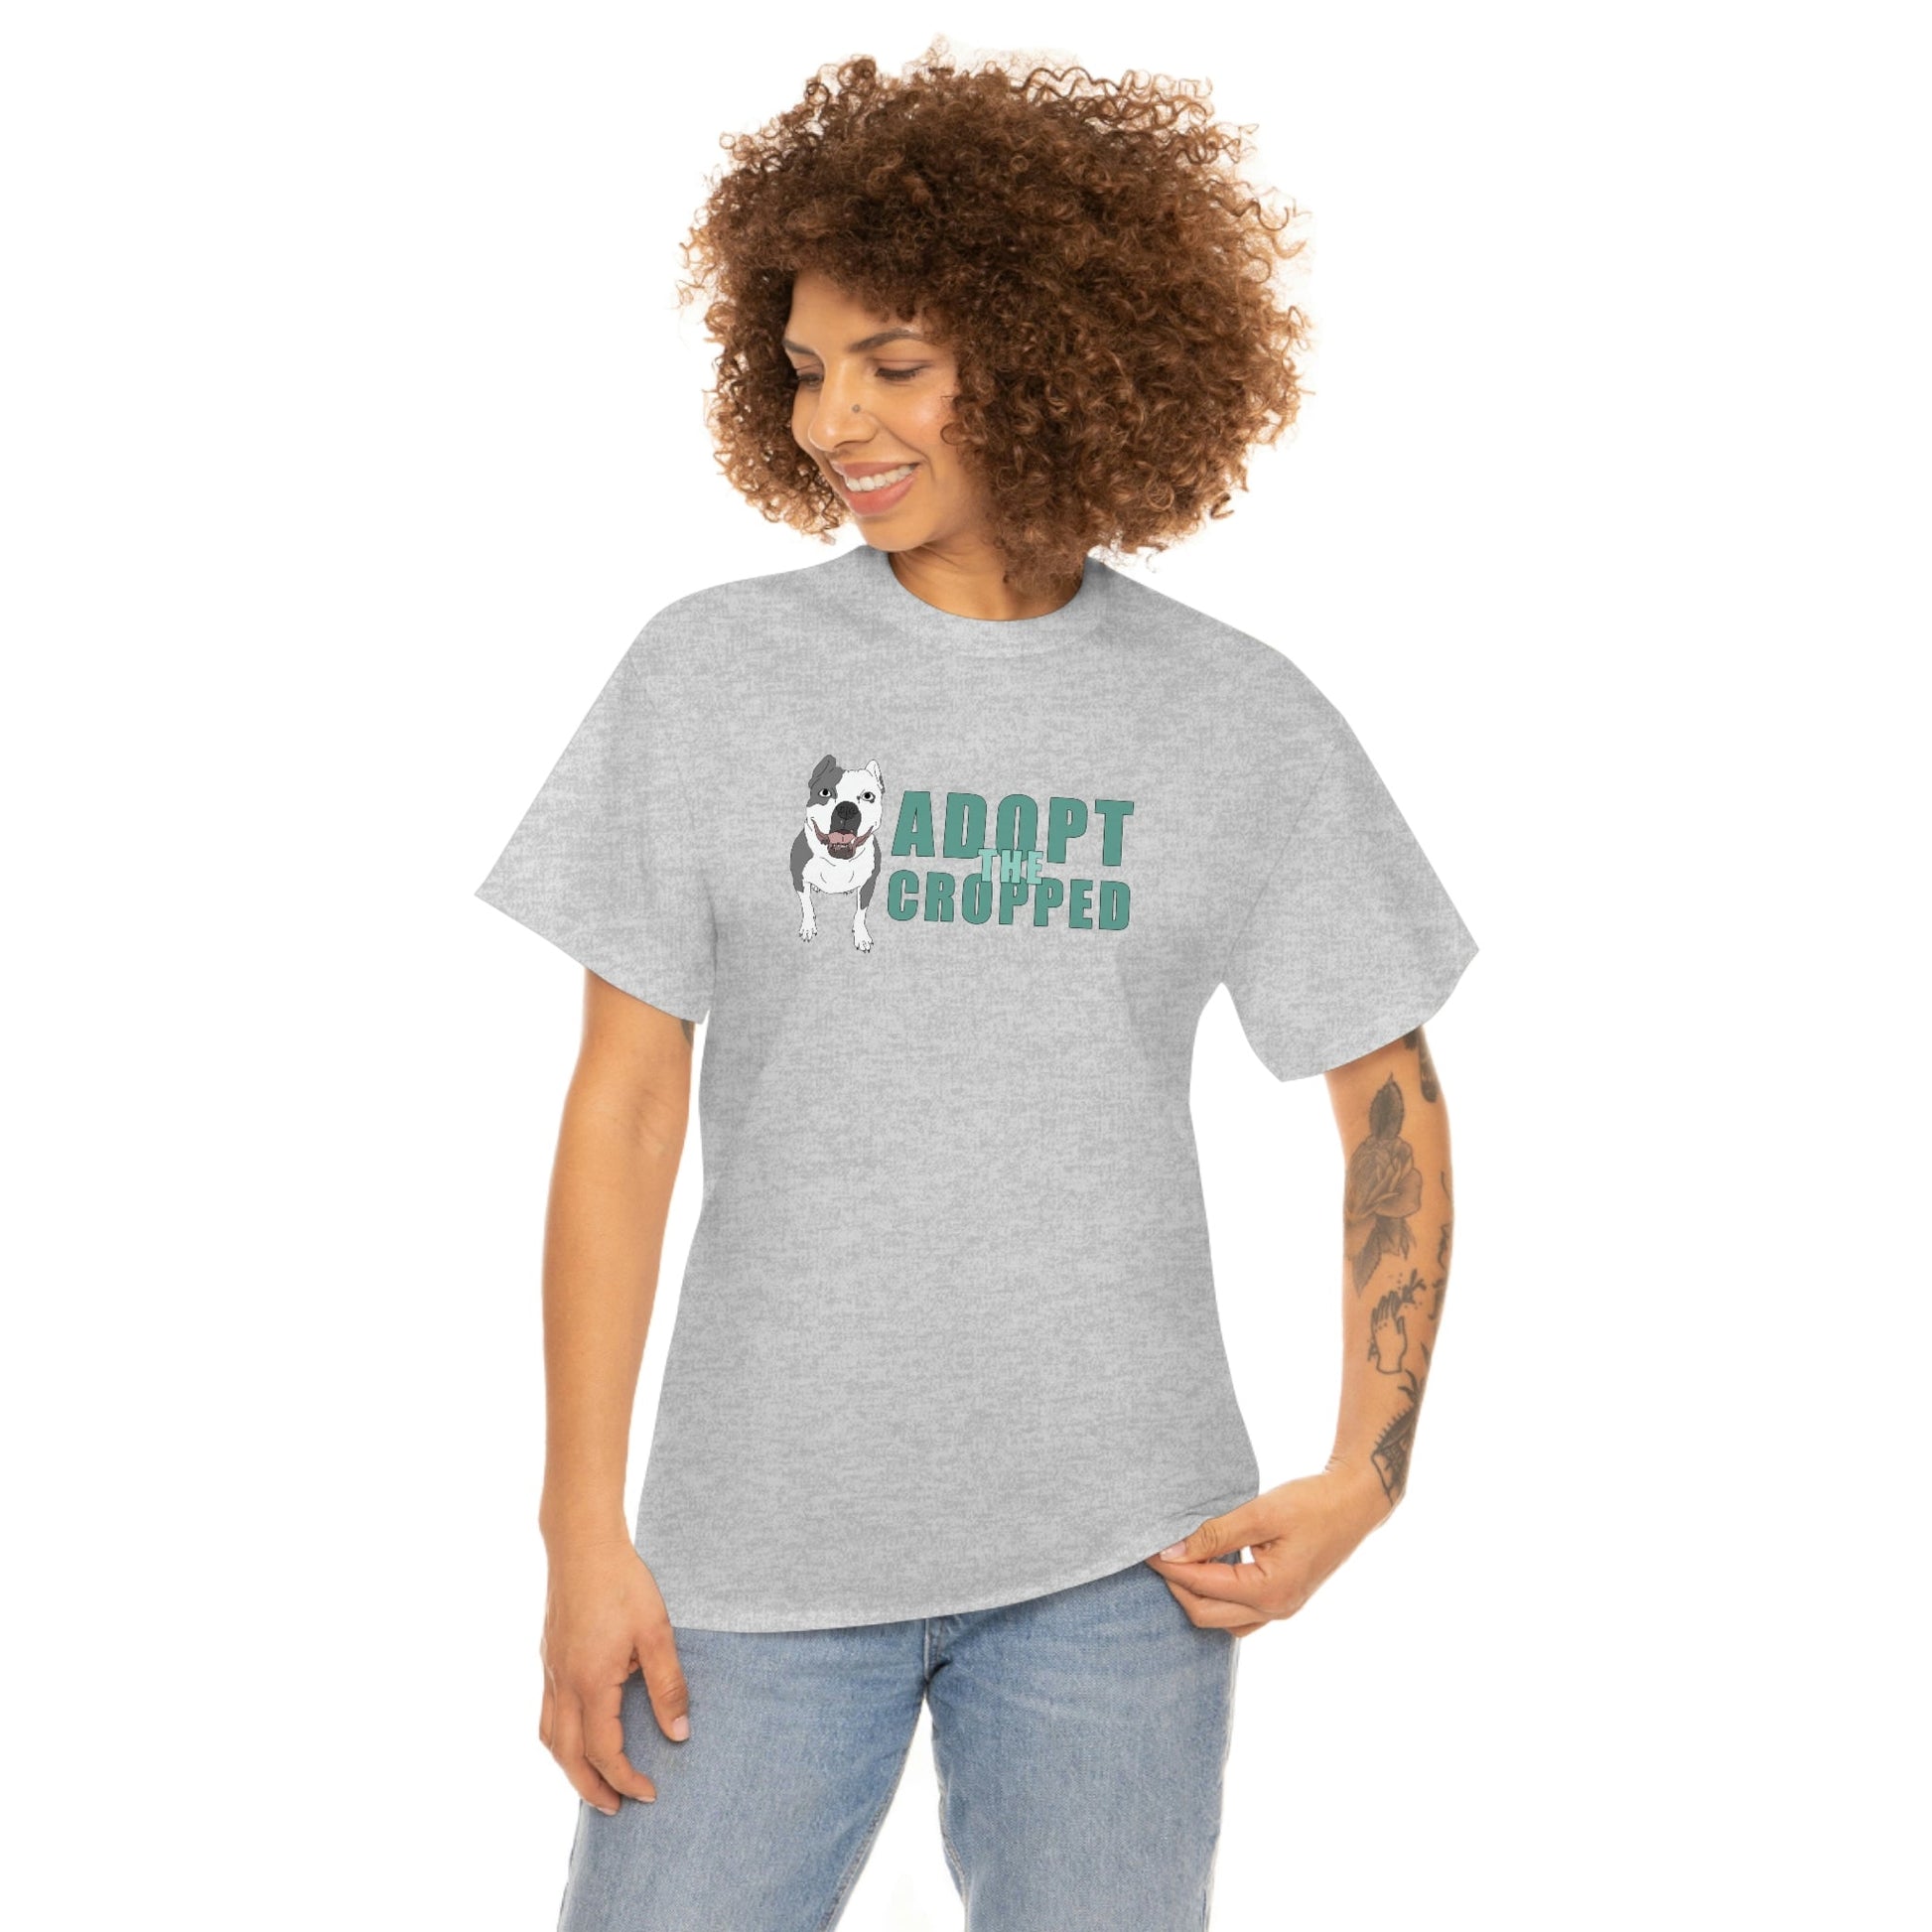 Adopt The Cropped | T-shirt - Detezi Designs-90983436482695168772